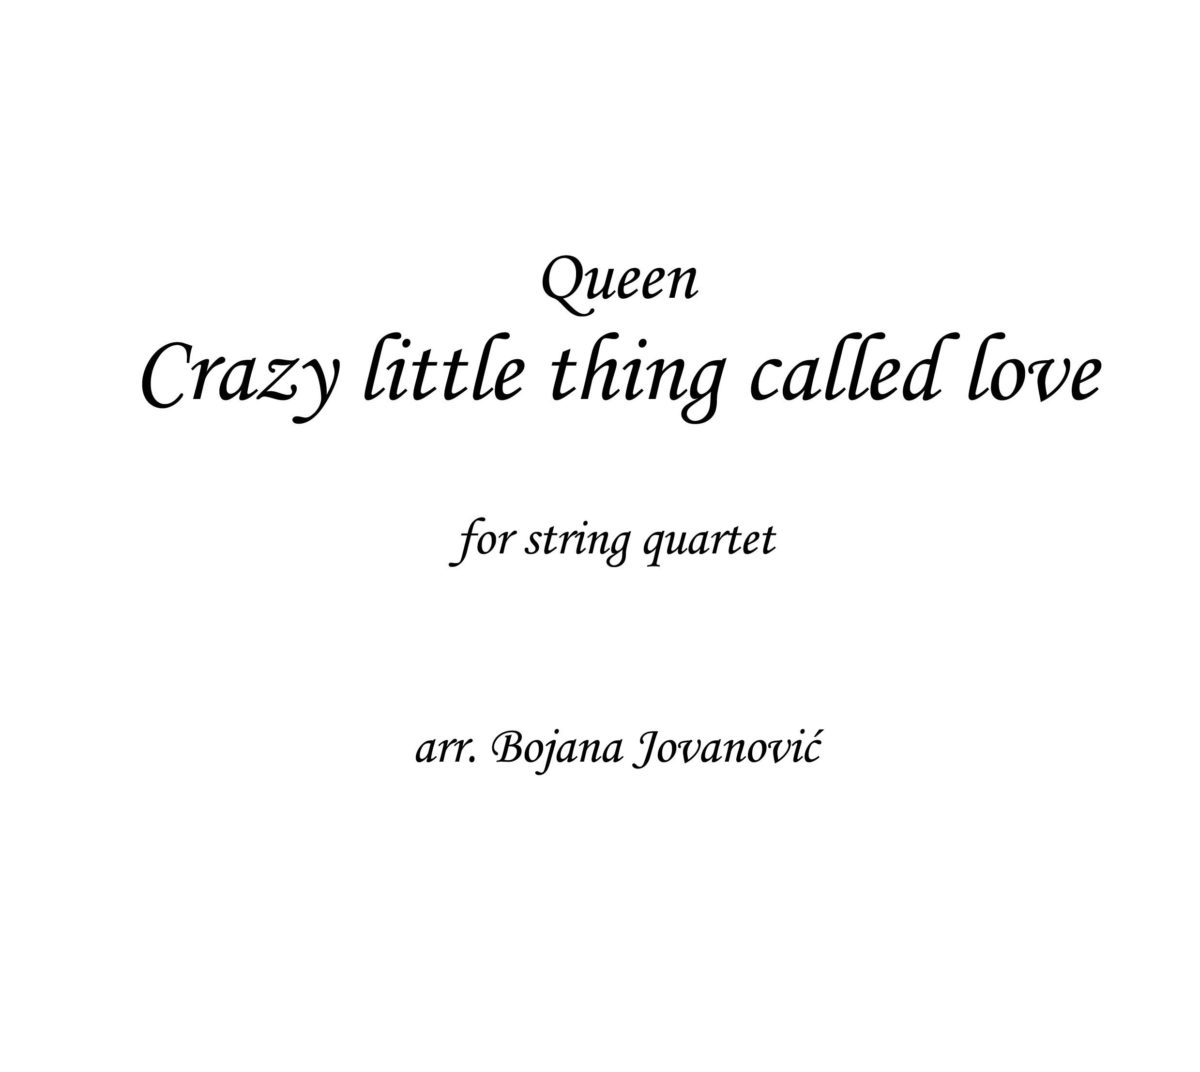 Crazy little thing called love (Queen) - Sheet Music